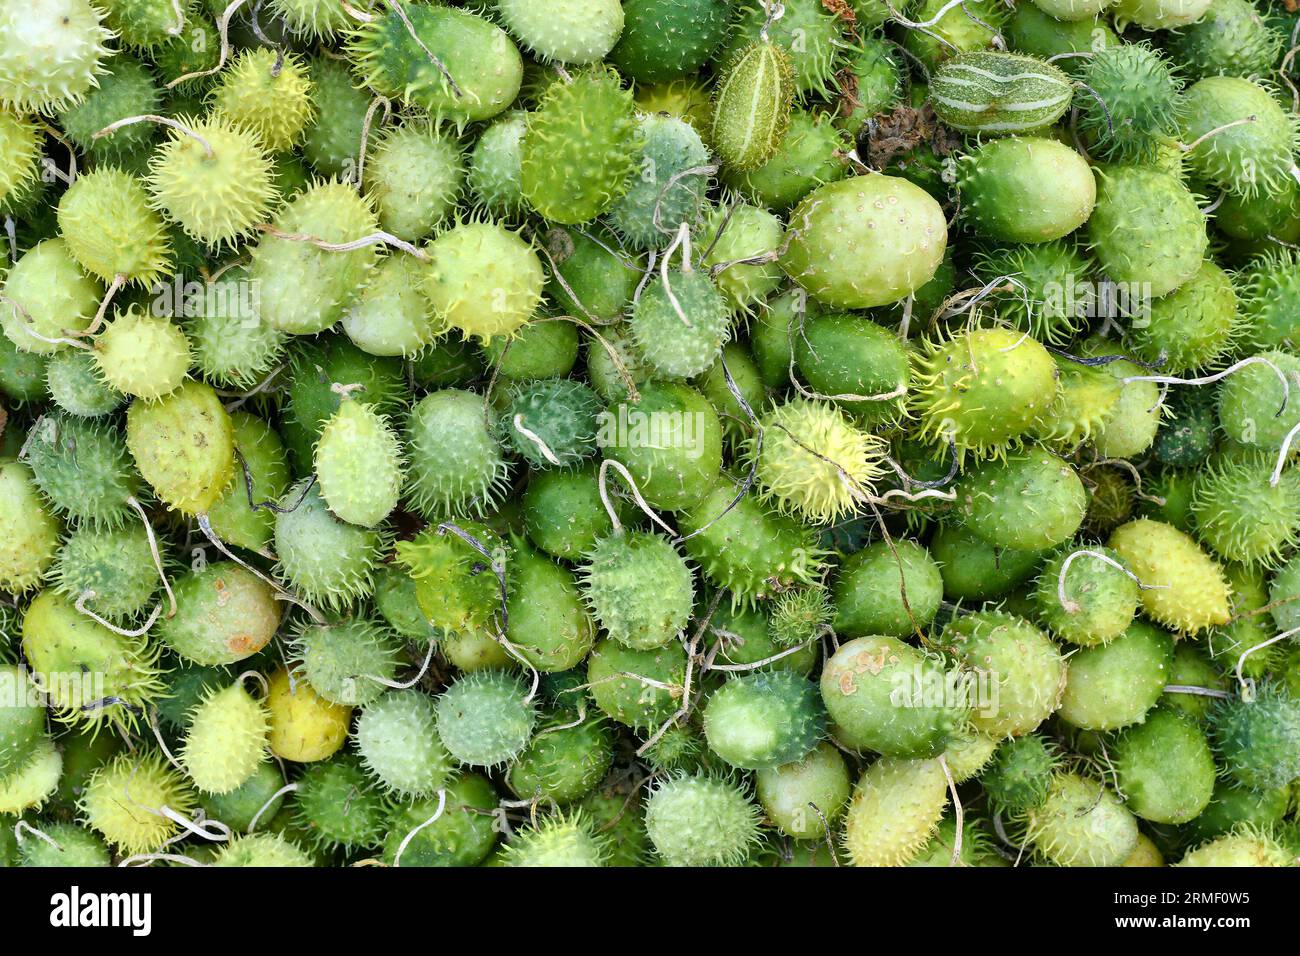 Many small ornamental green wild cucumber gourds with thorns. Botanic name 'Echinocystis Lobata' Stock Photo